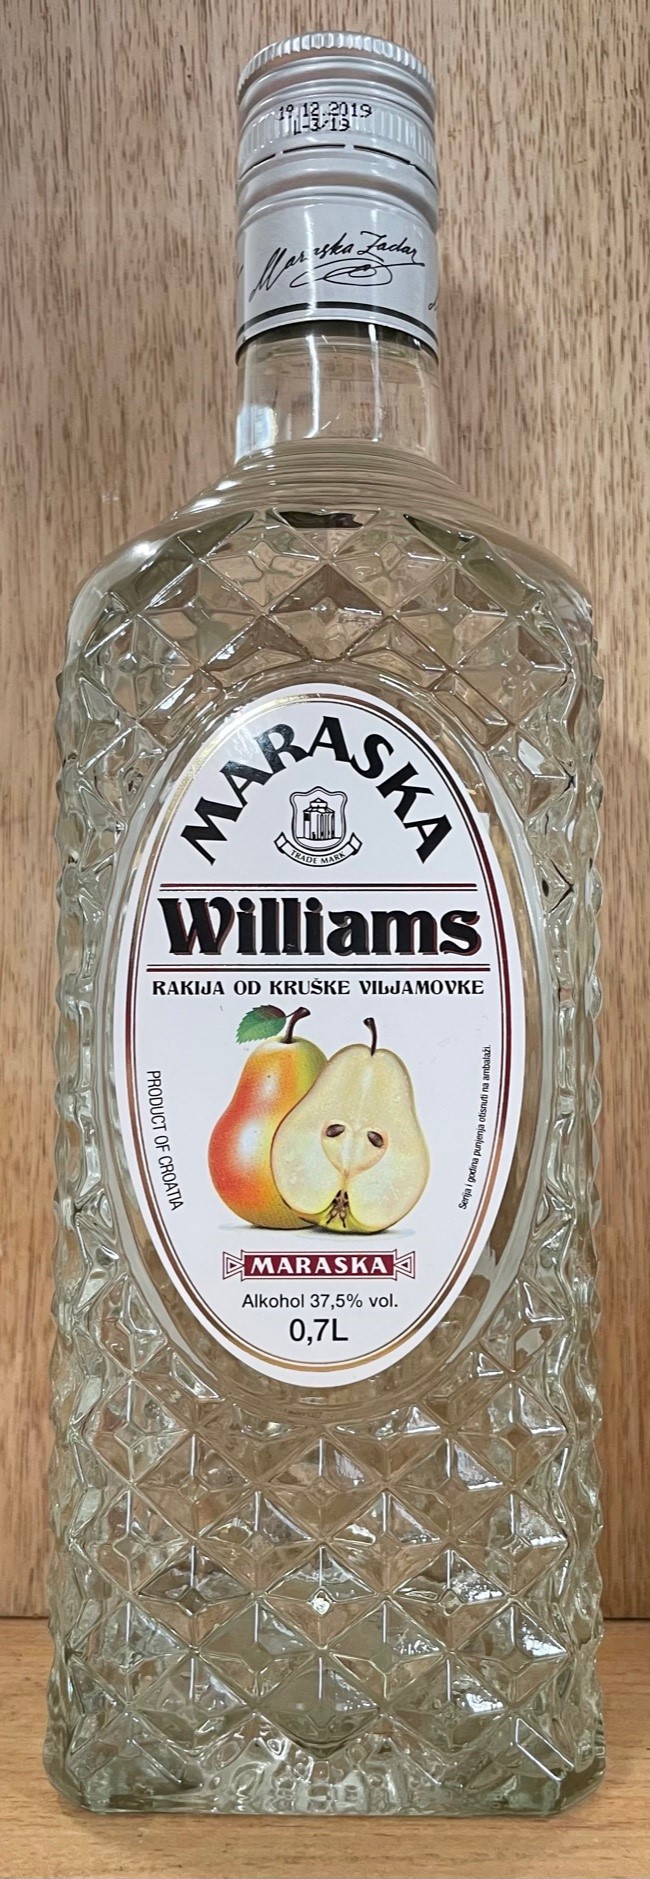 Maraska Williams-pear Brandy